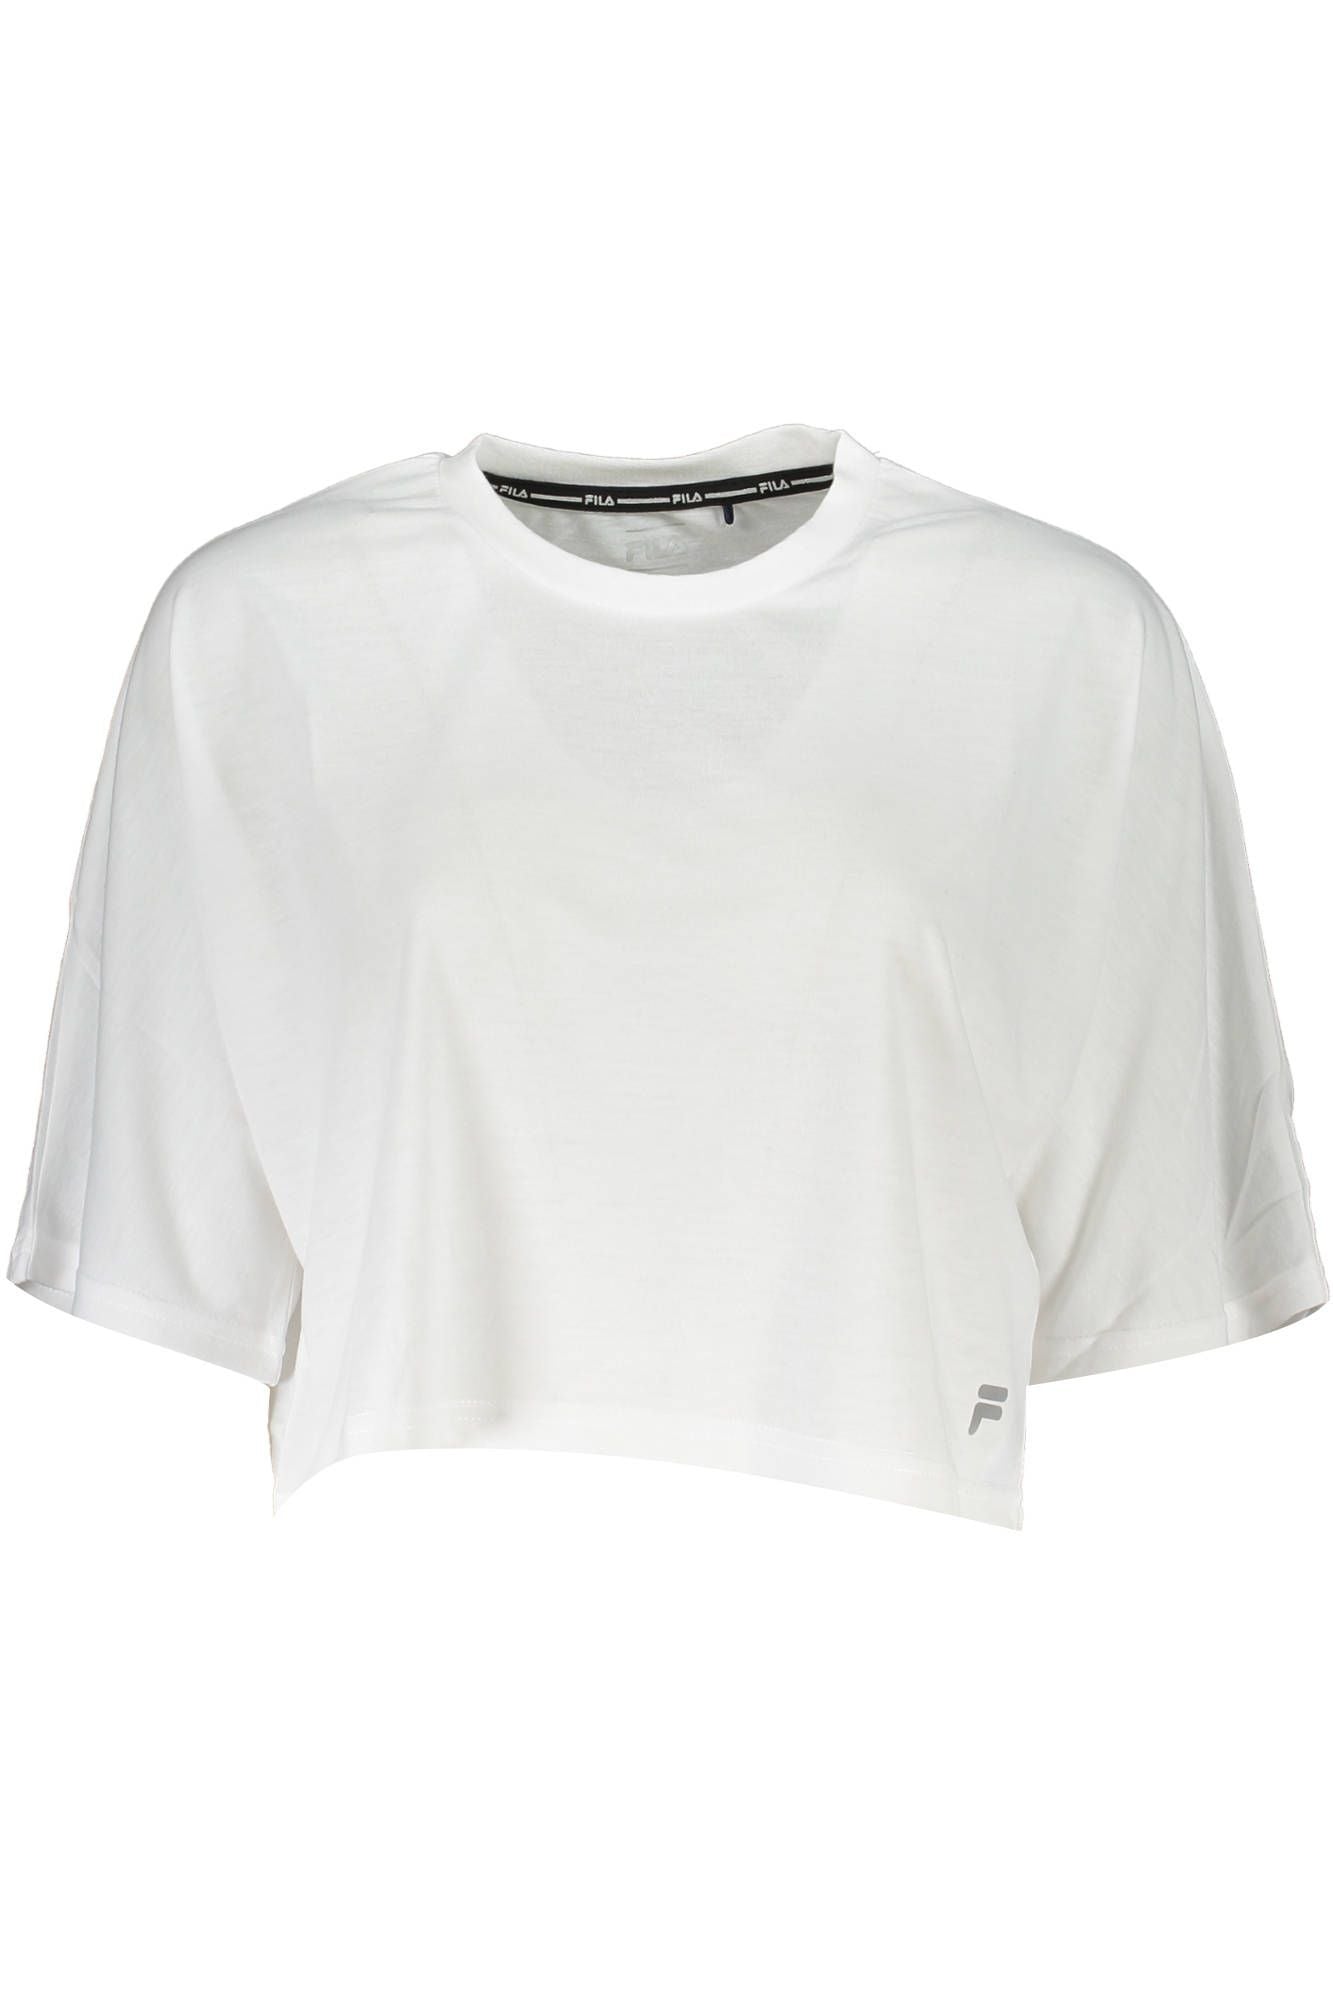 Fila White Polyester Tops & T-Shirt